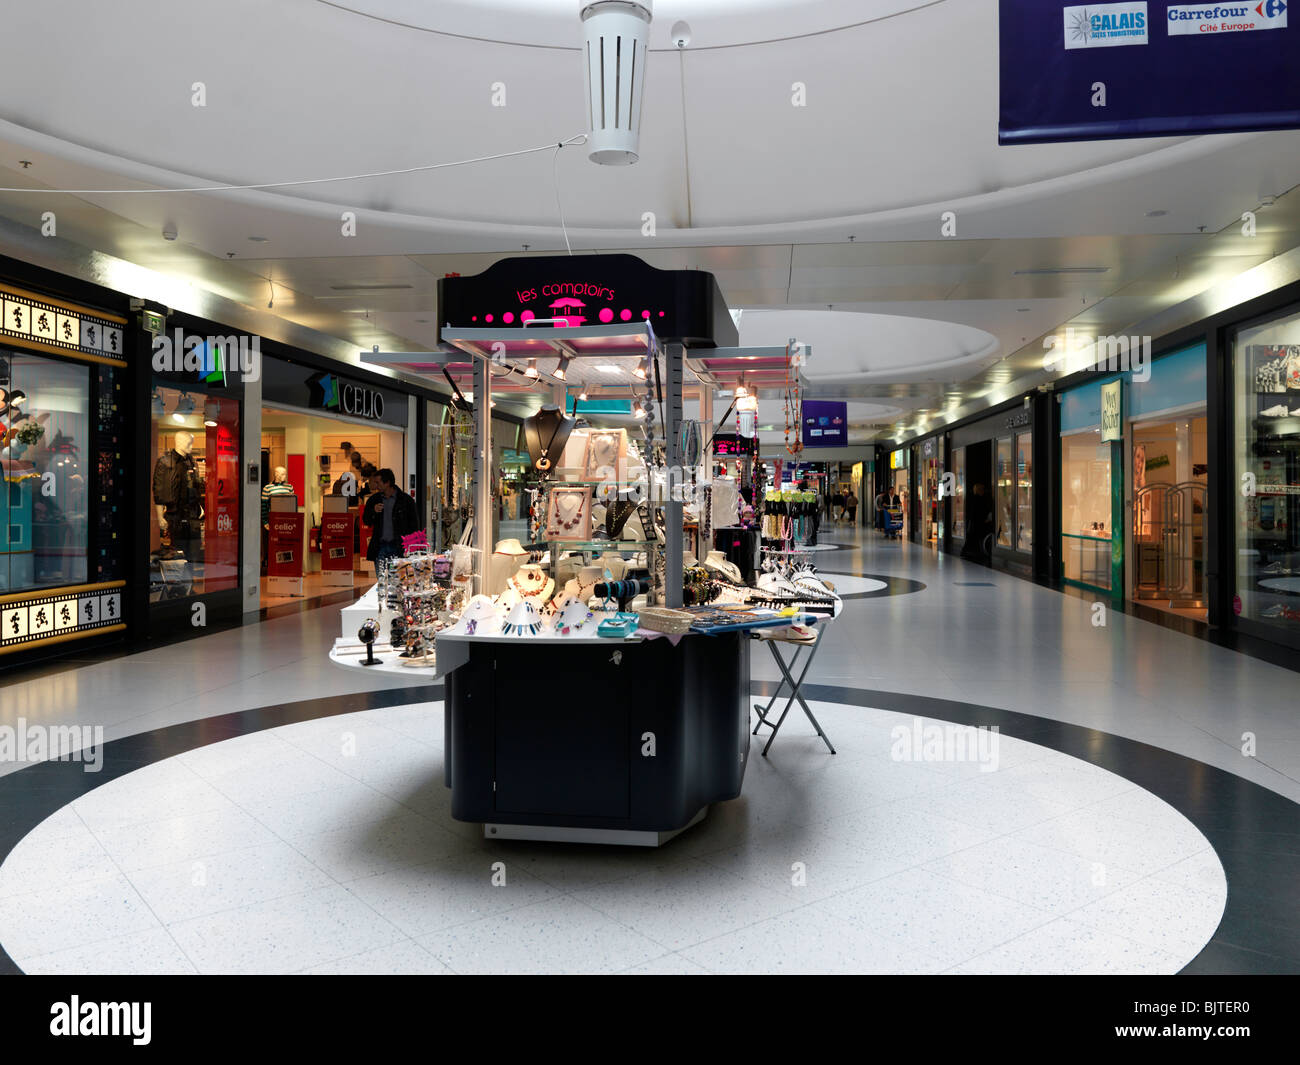 Cite Europe Shopping Centre Calais Banque d'image et photos - Alamy